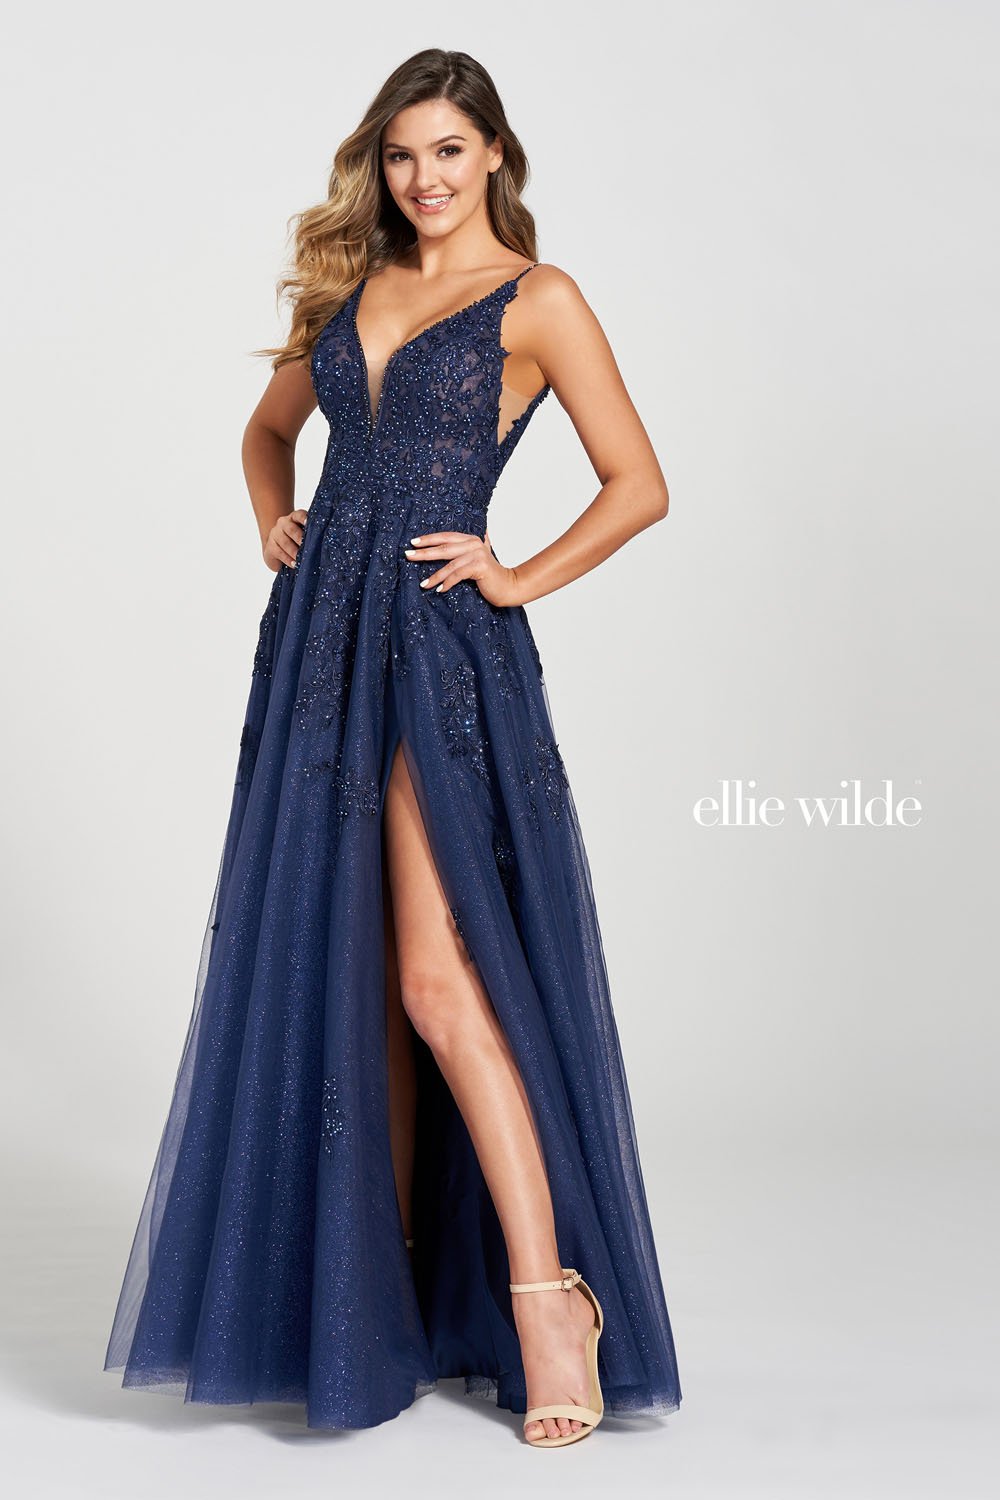 Ellie Wilde Navy Blue EW122102 Prom Dress Image.  Navy Blue formal dress.